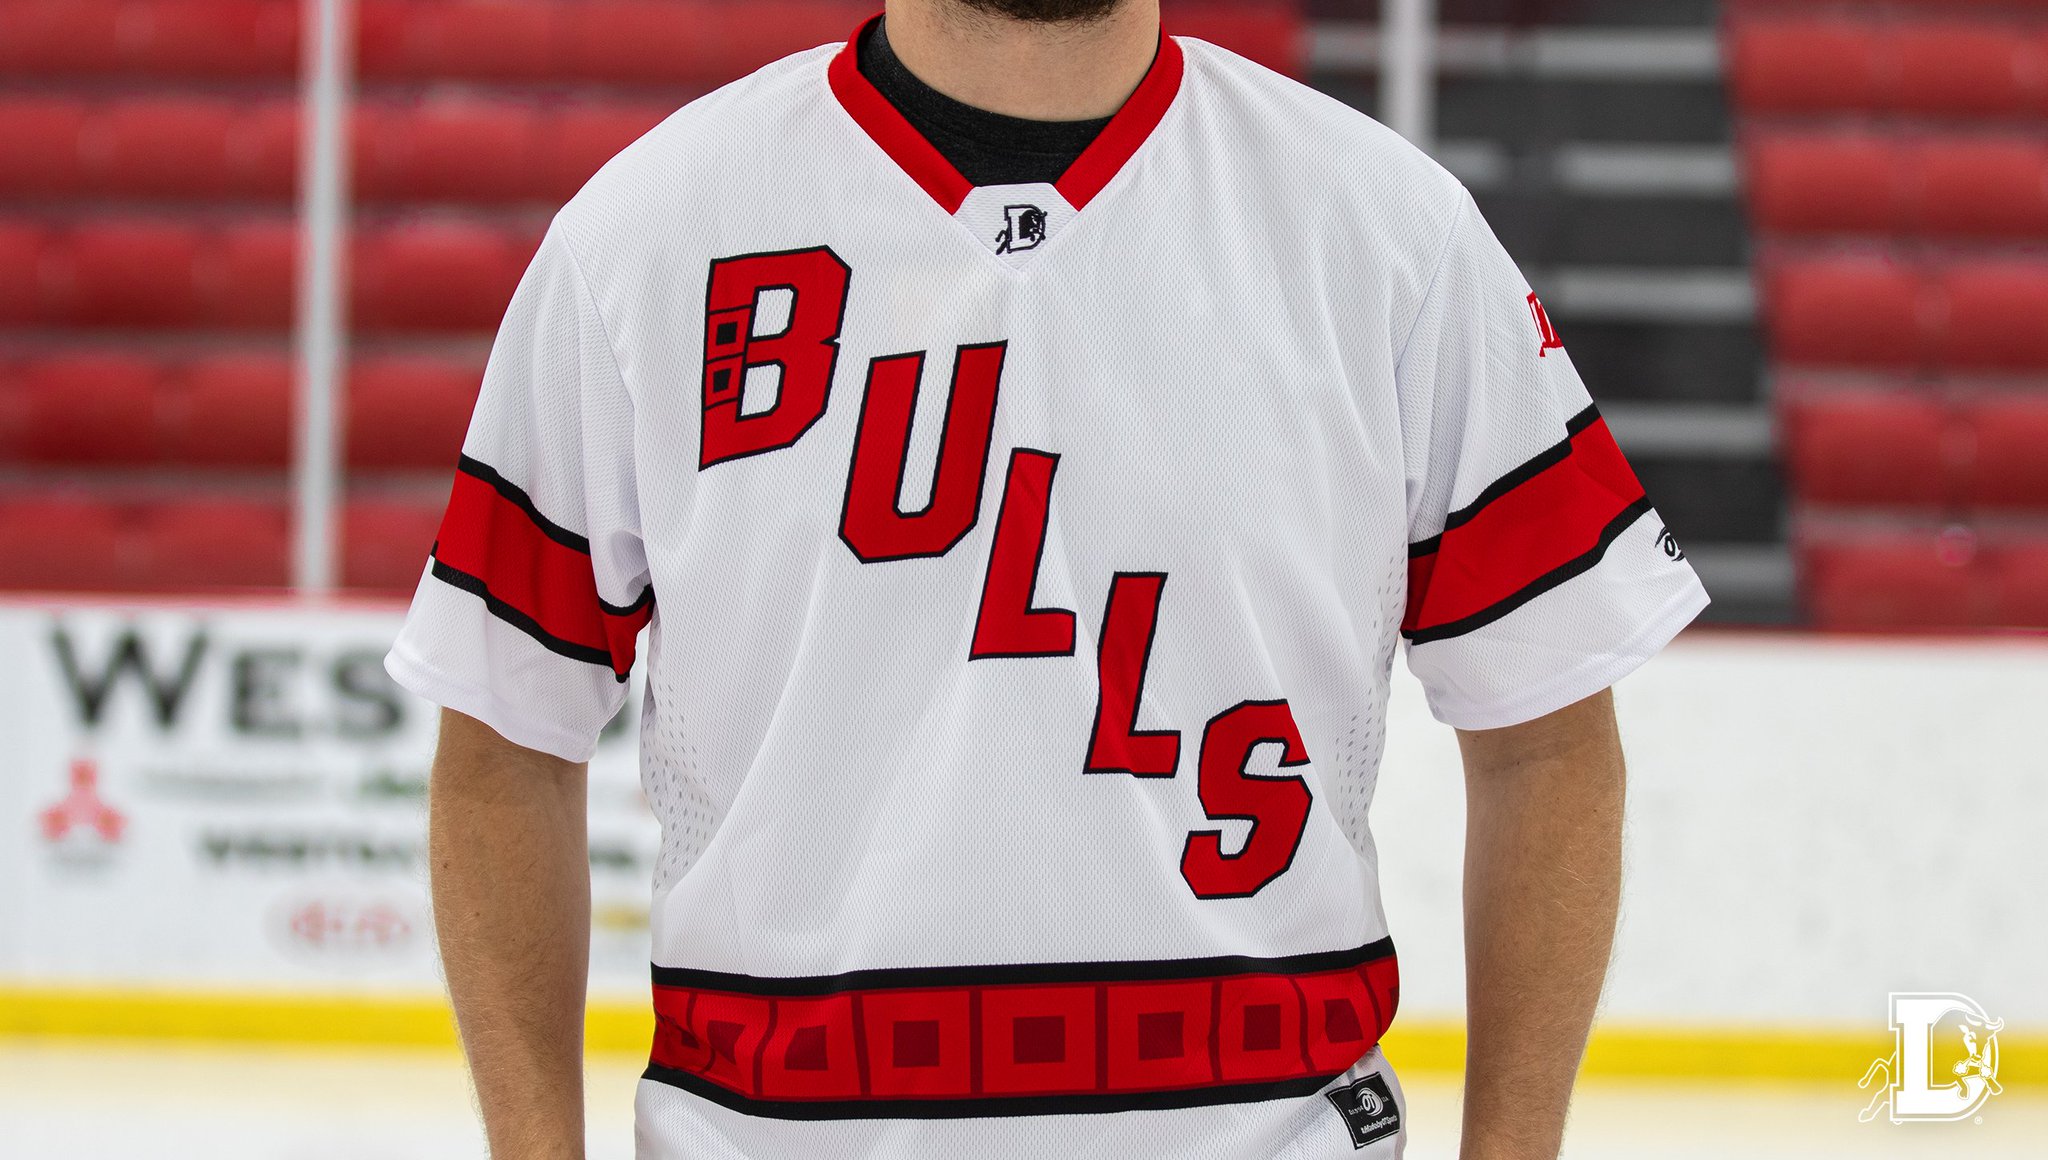 Durham Bulls on X: Now presenting the #DurhamBulls new uniforms